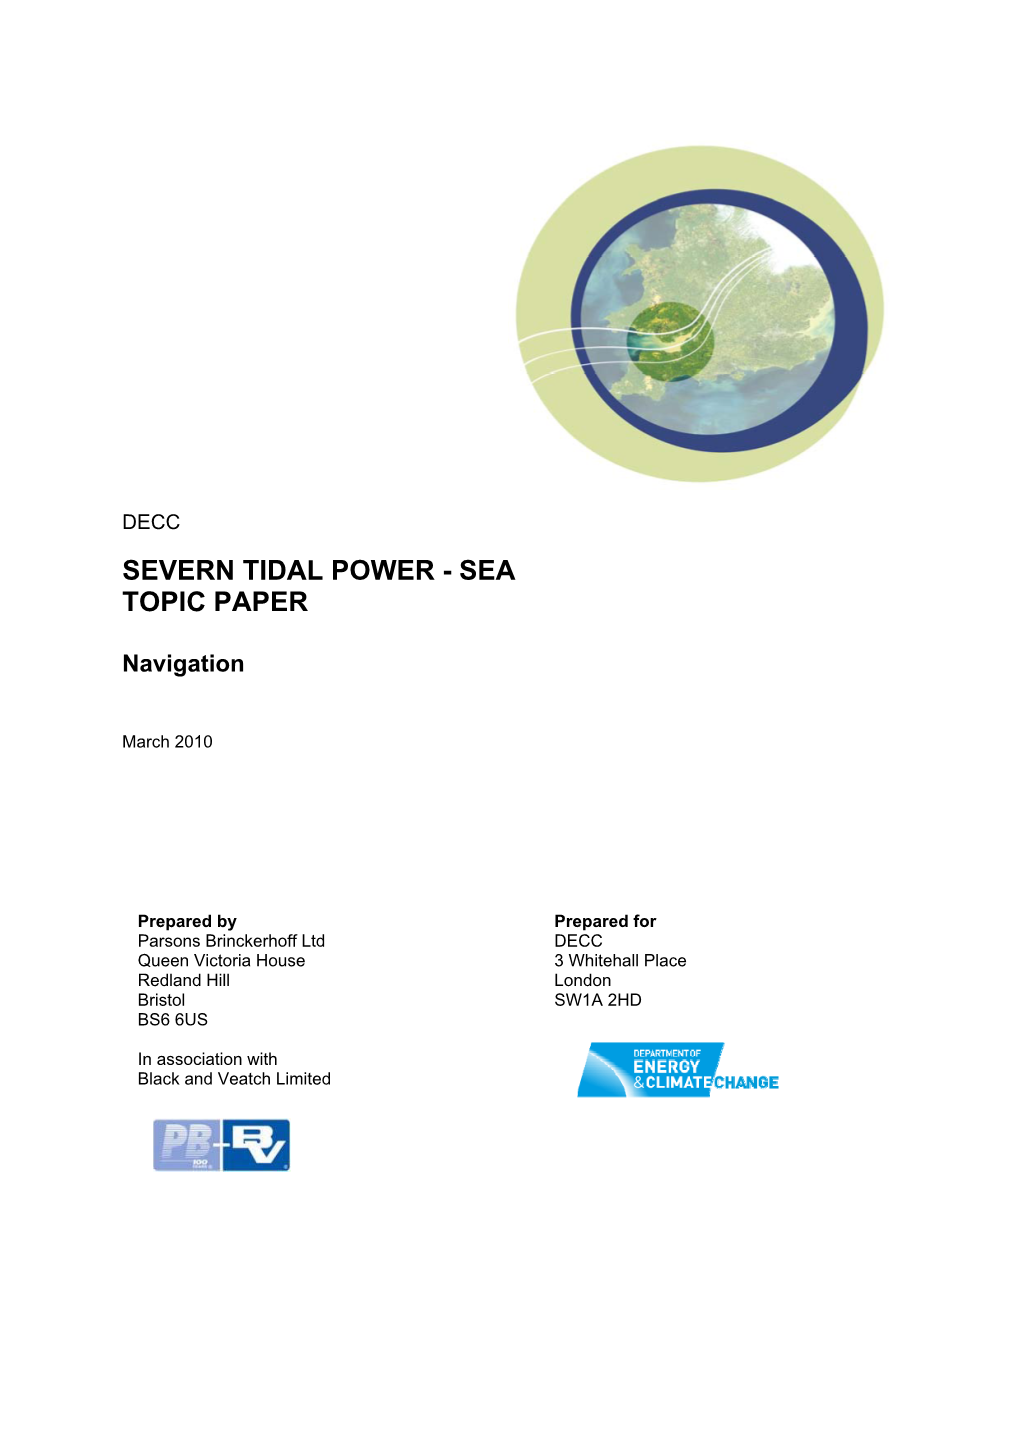 Severn Tidal Power - Sea Topic Paper